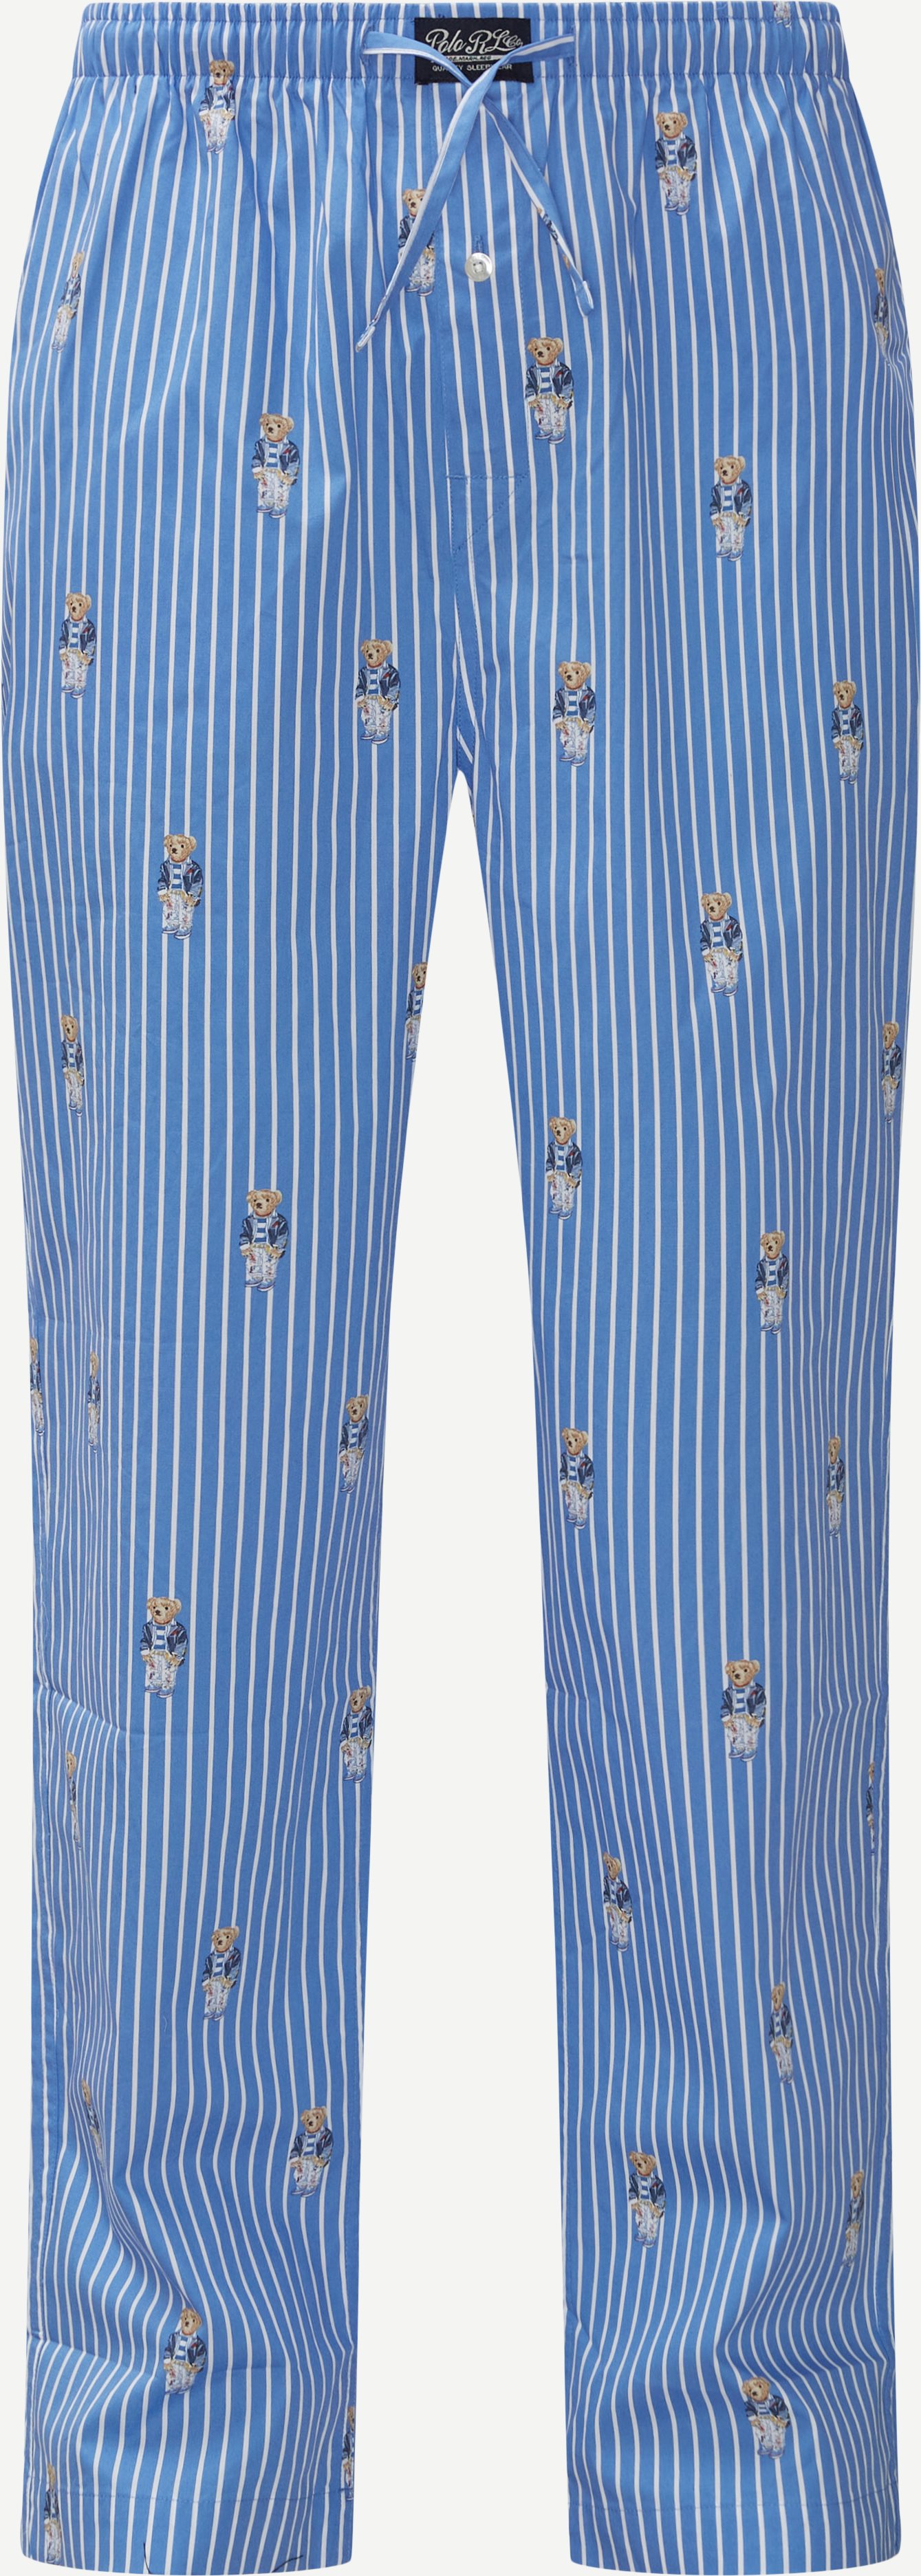 Pyjamas Bukser - Undertøj - Regular fit - Blå